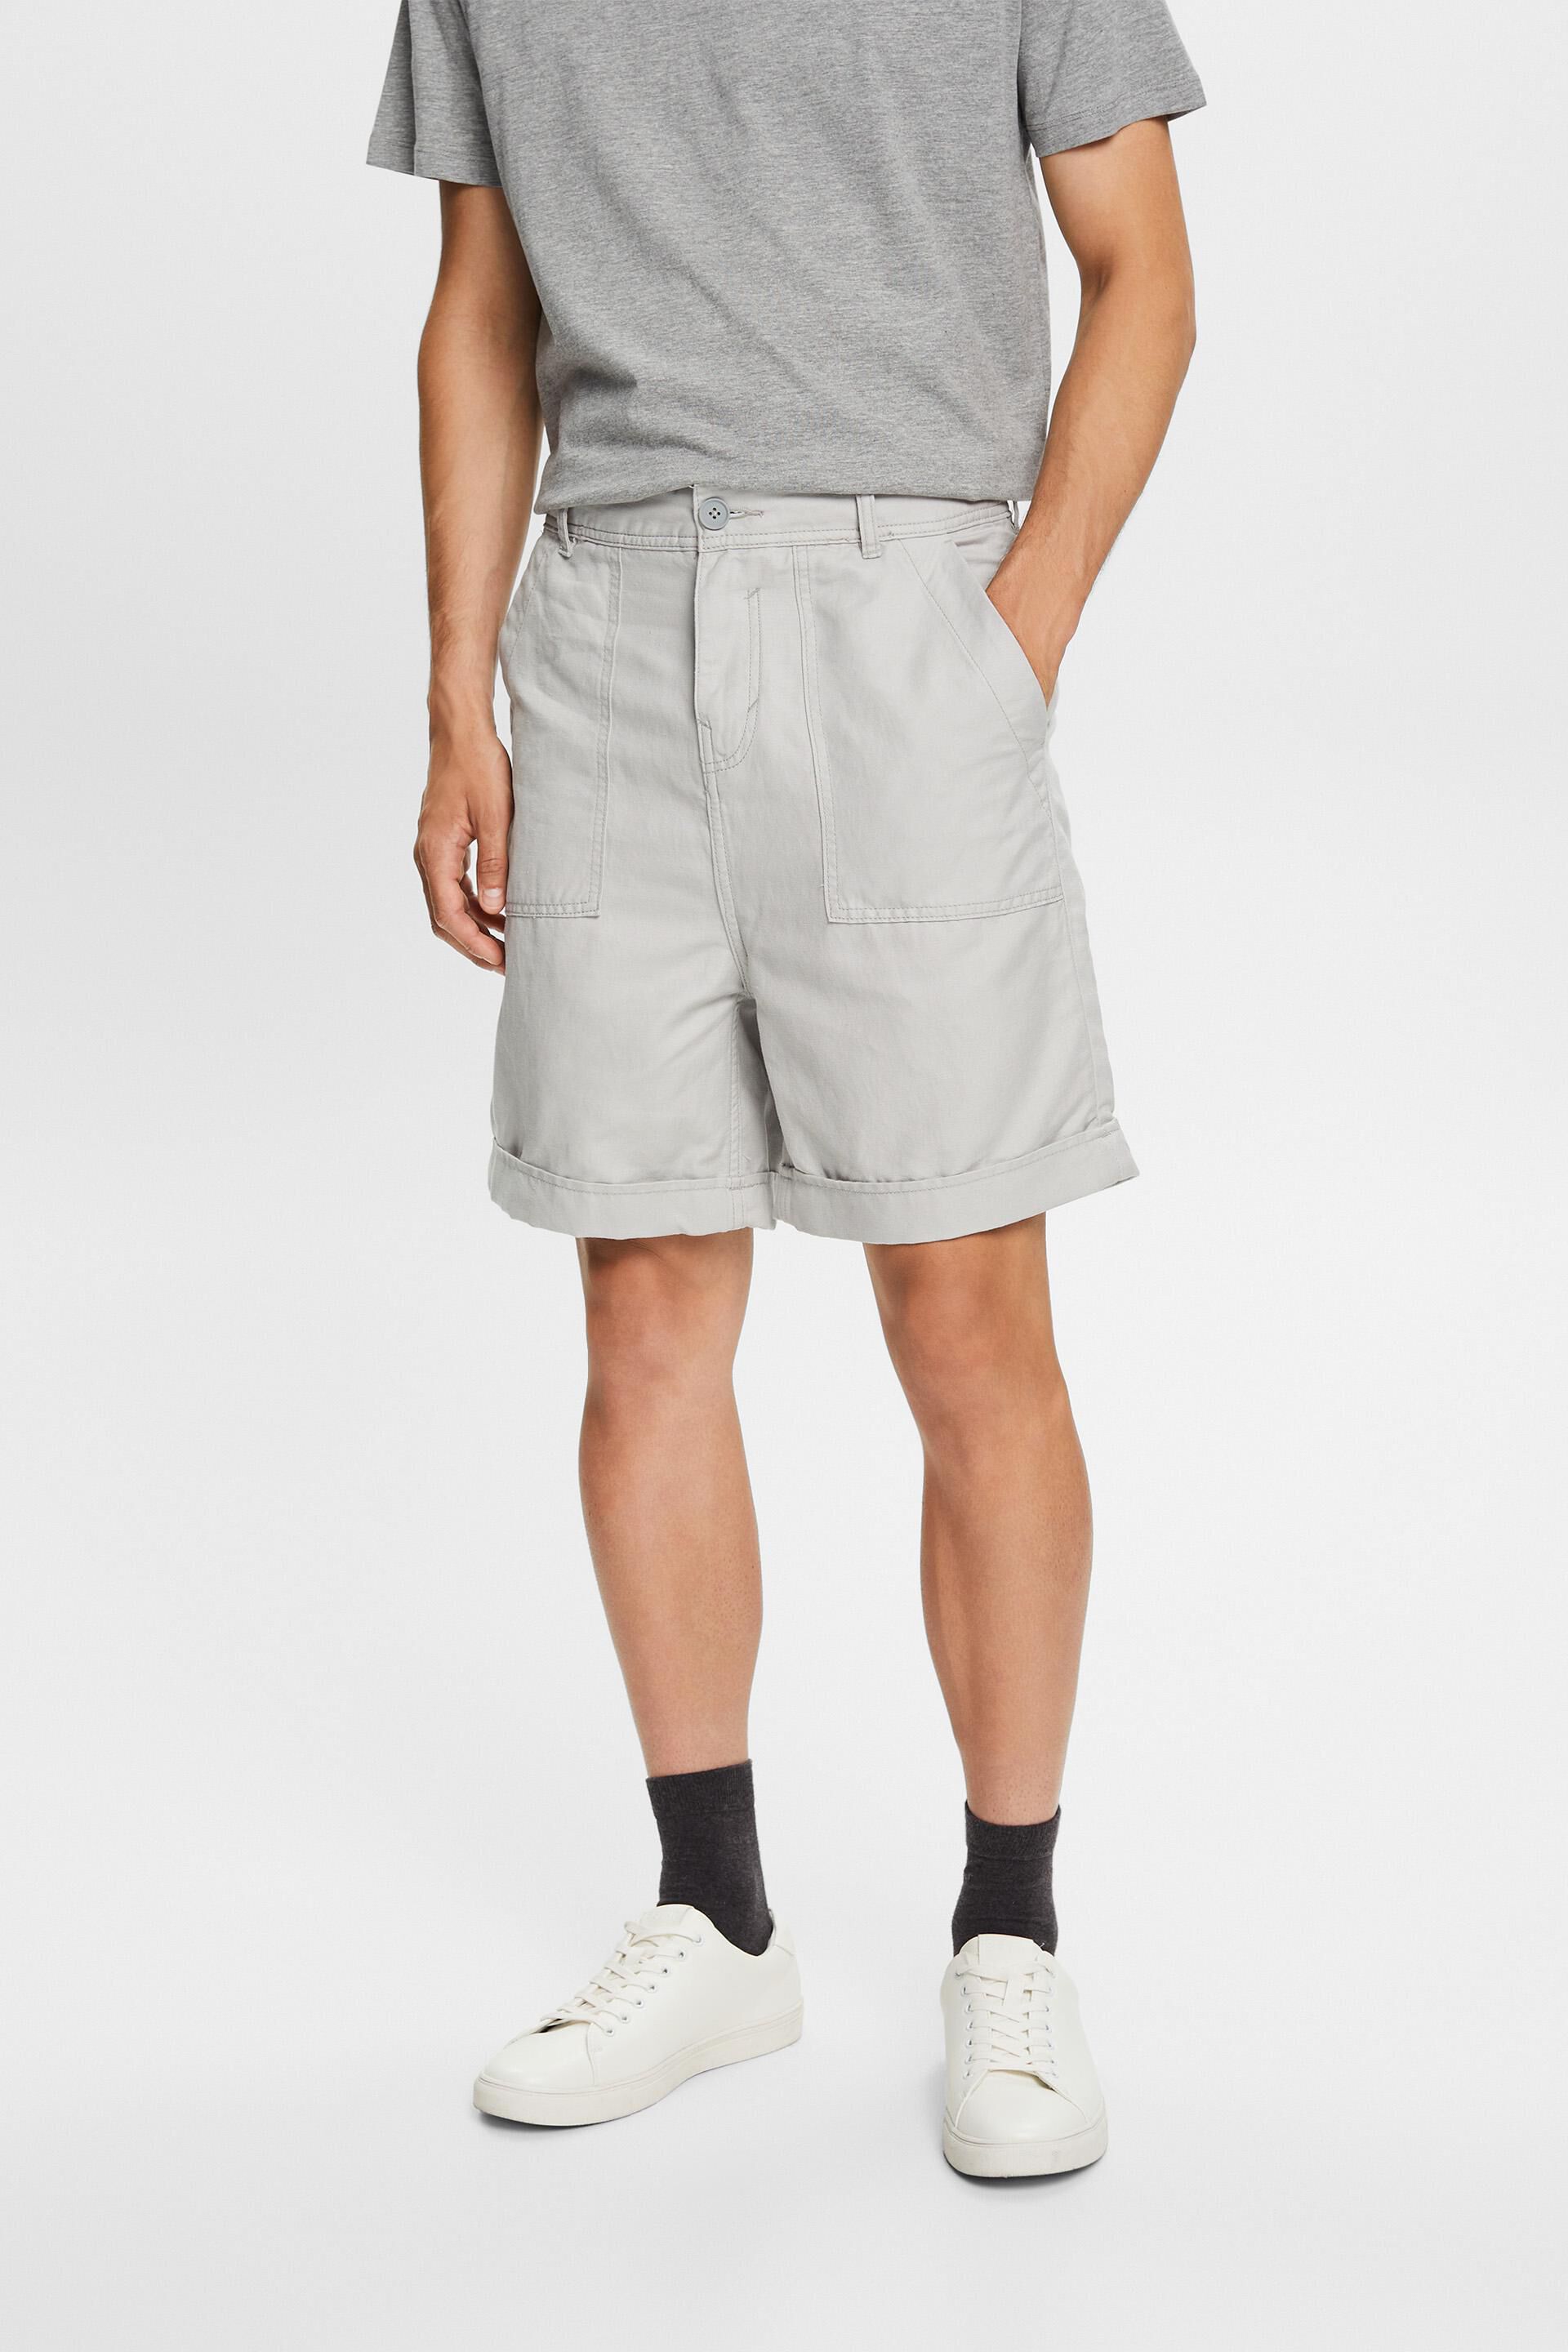 Esprit Bikini Bermuda shorts, blend cotton-linen